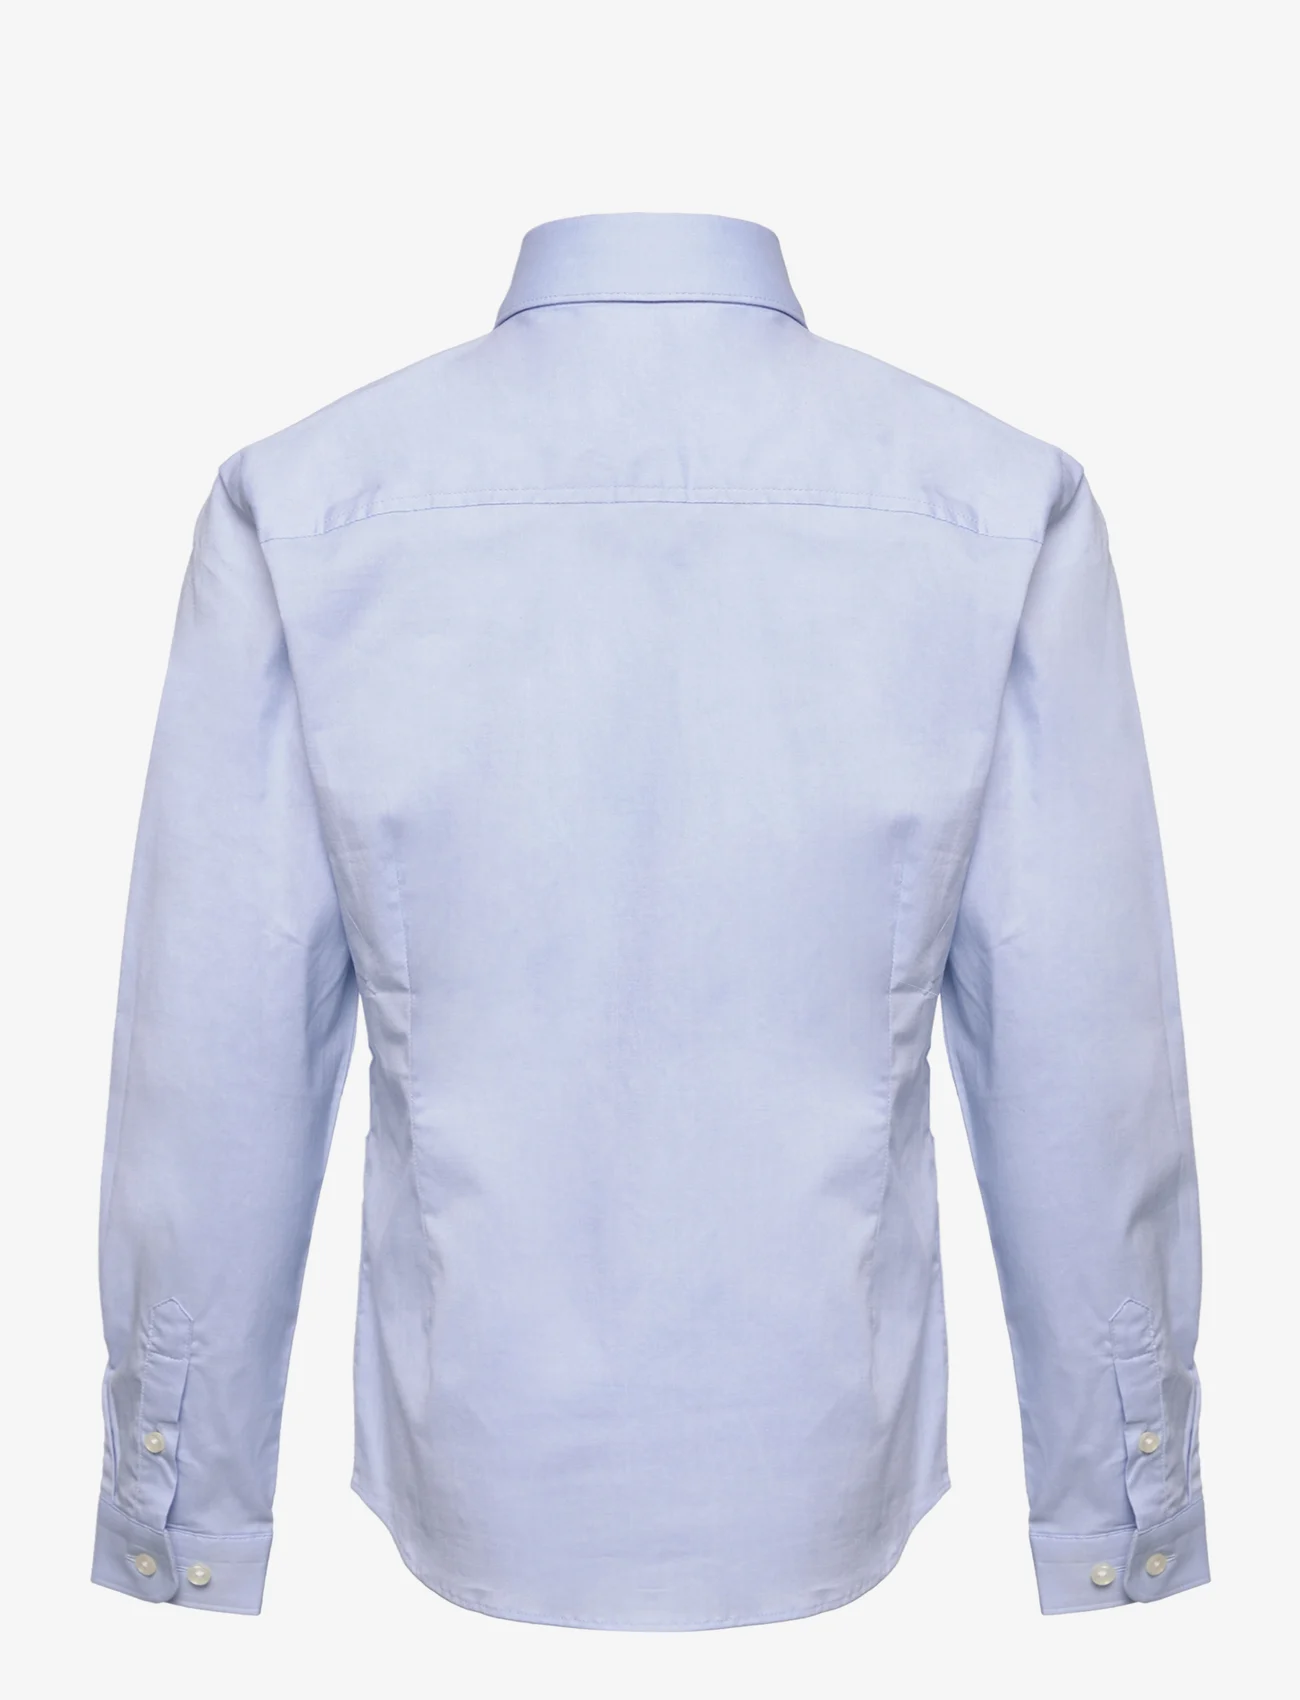 Jack & Jones - JPRPARMA SHIRT L/S NOOS JNR - long-sleeved shirts - cashmere blue - 1